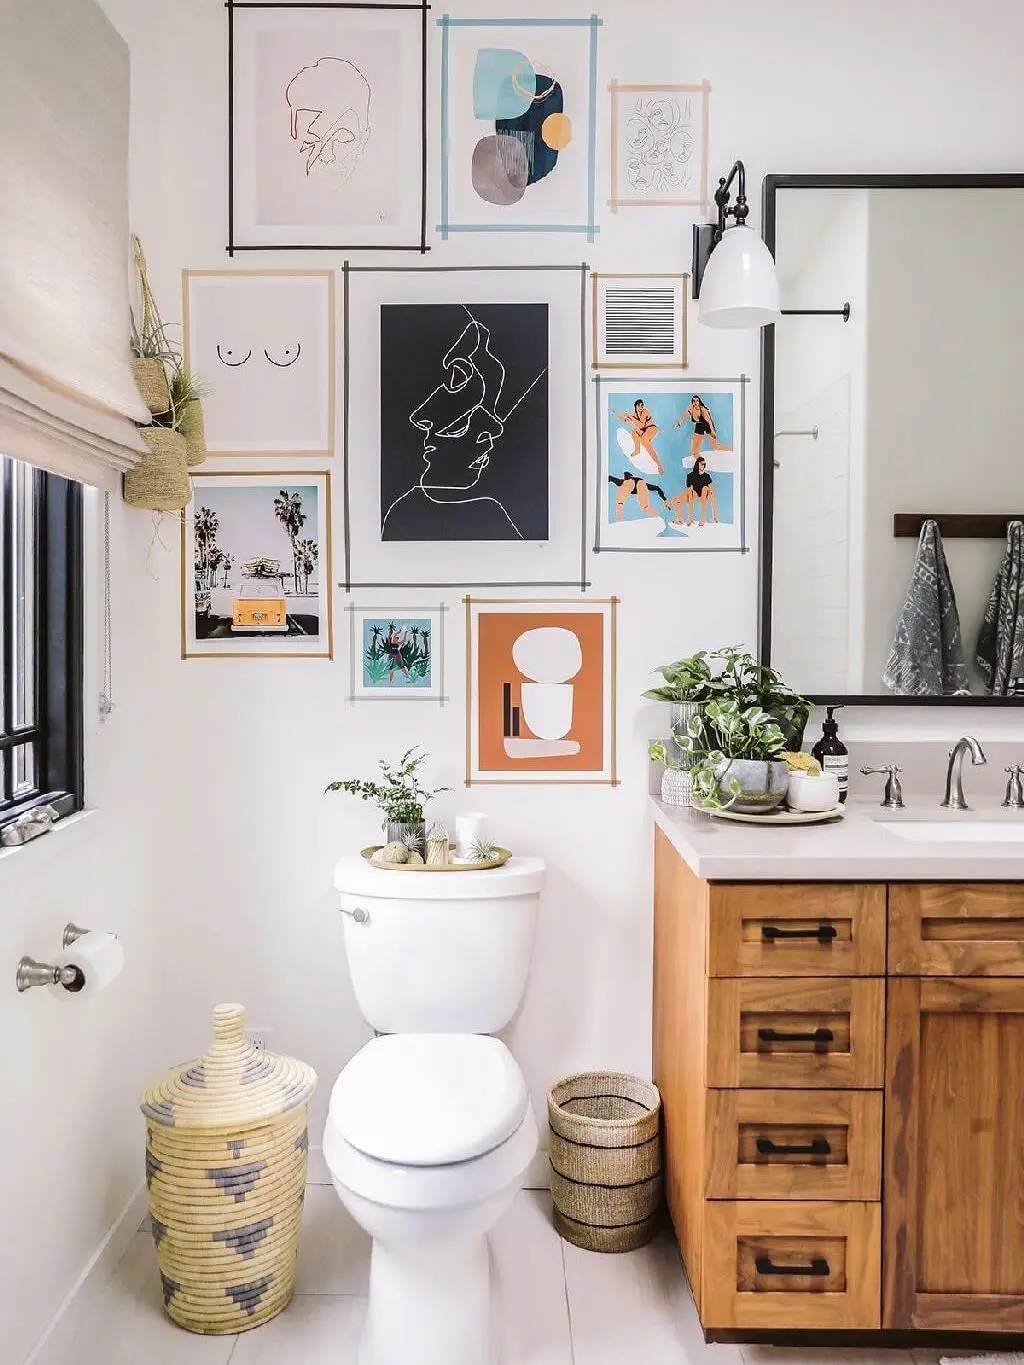 6 Easy Ways to Spice Up a Bland Rental Bathroom